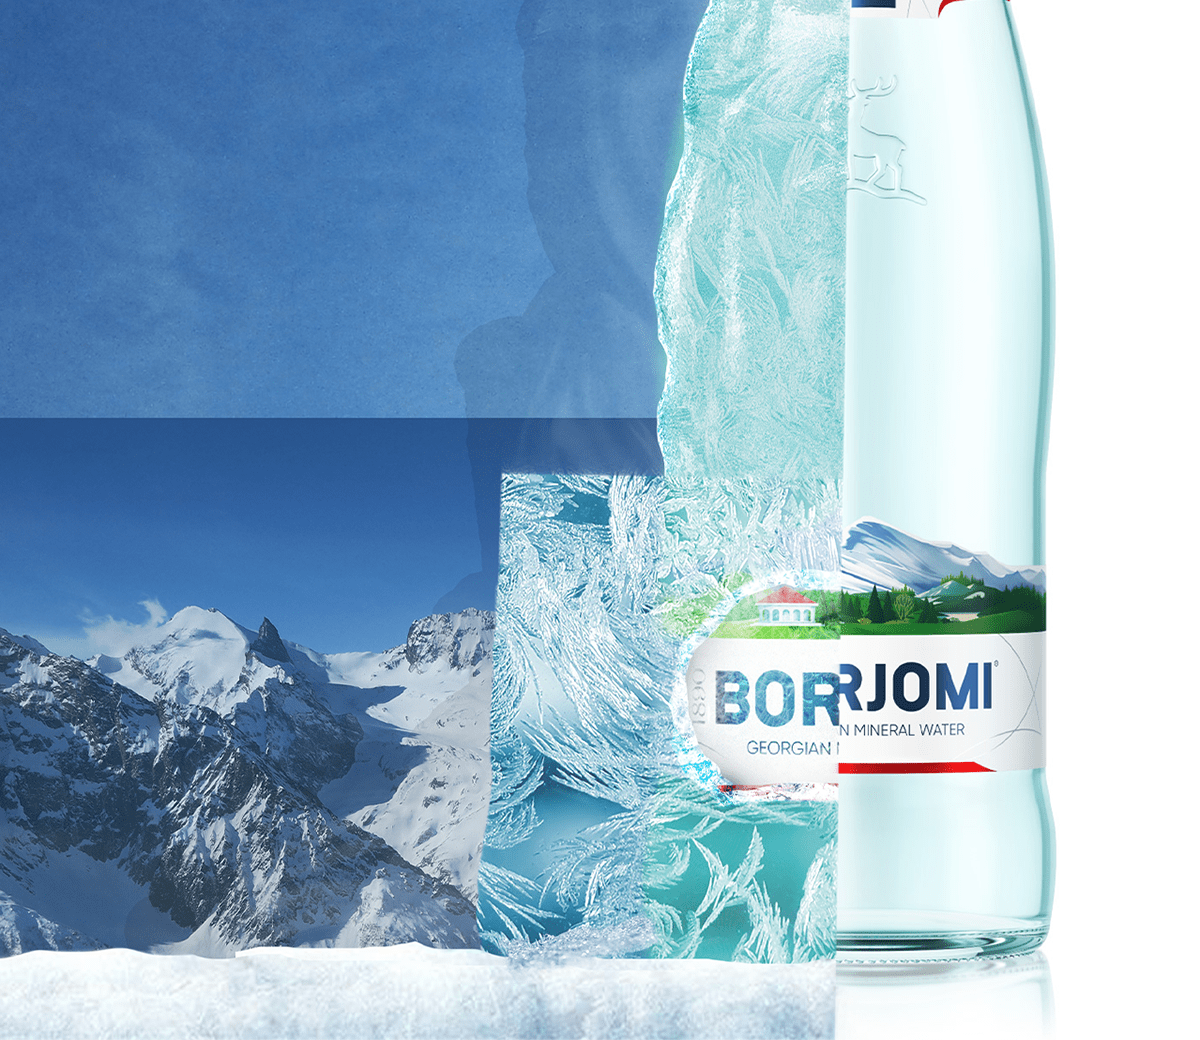 ads ads design adsoftheworld Borjomi BORJOMI mineral water Georgia ice Ice Bottle manipulation manipulation design